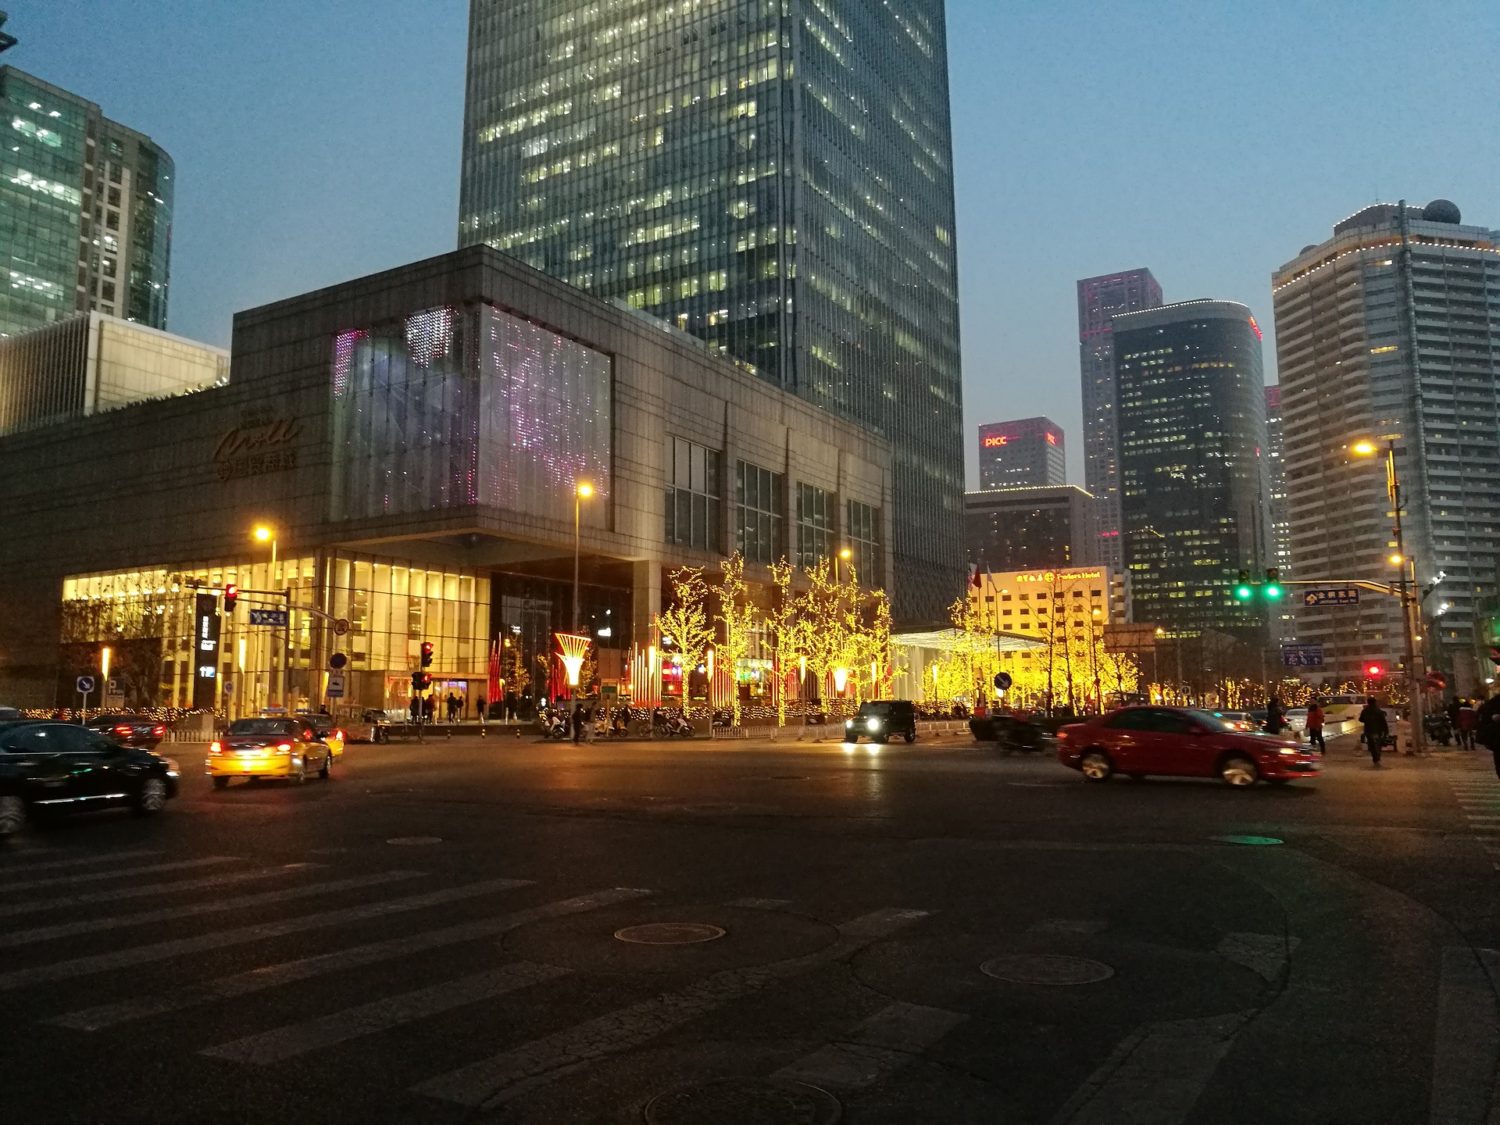 Beijing, China at night